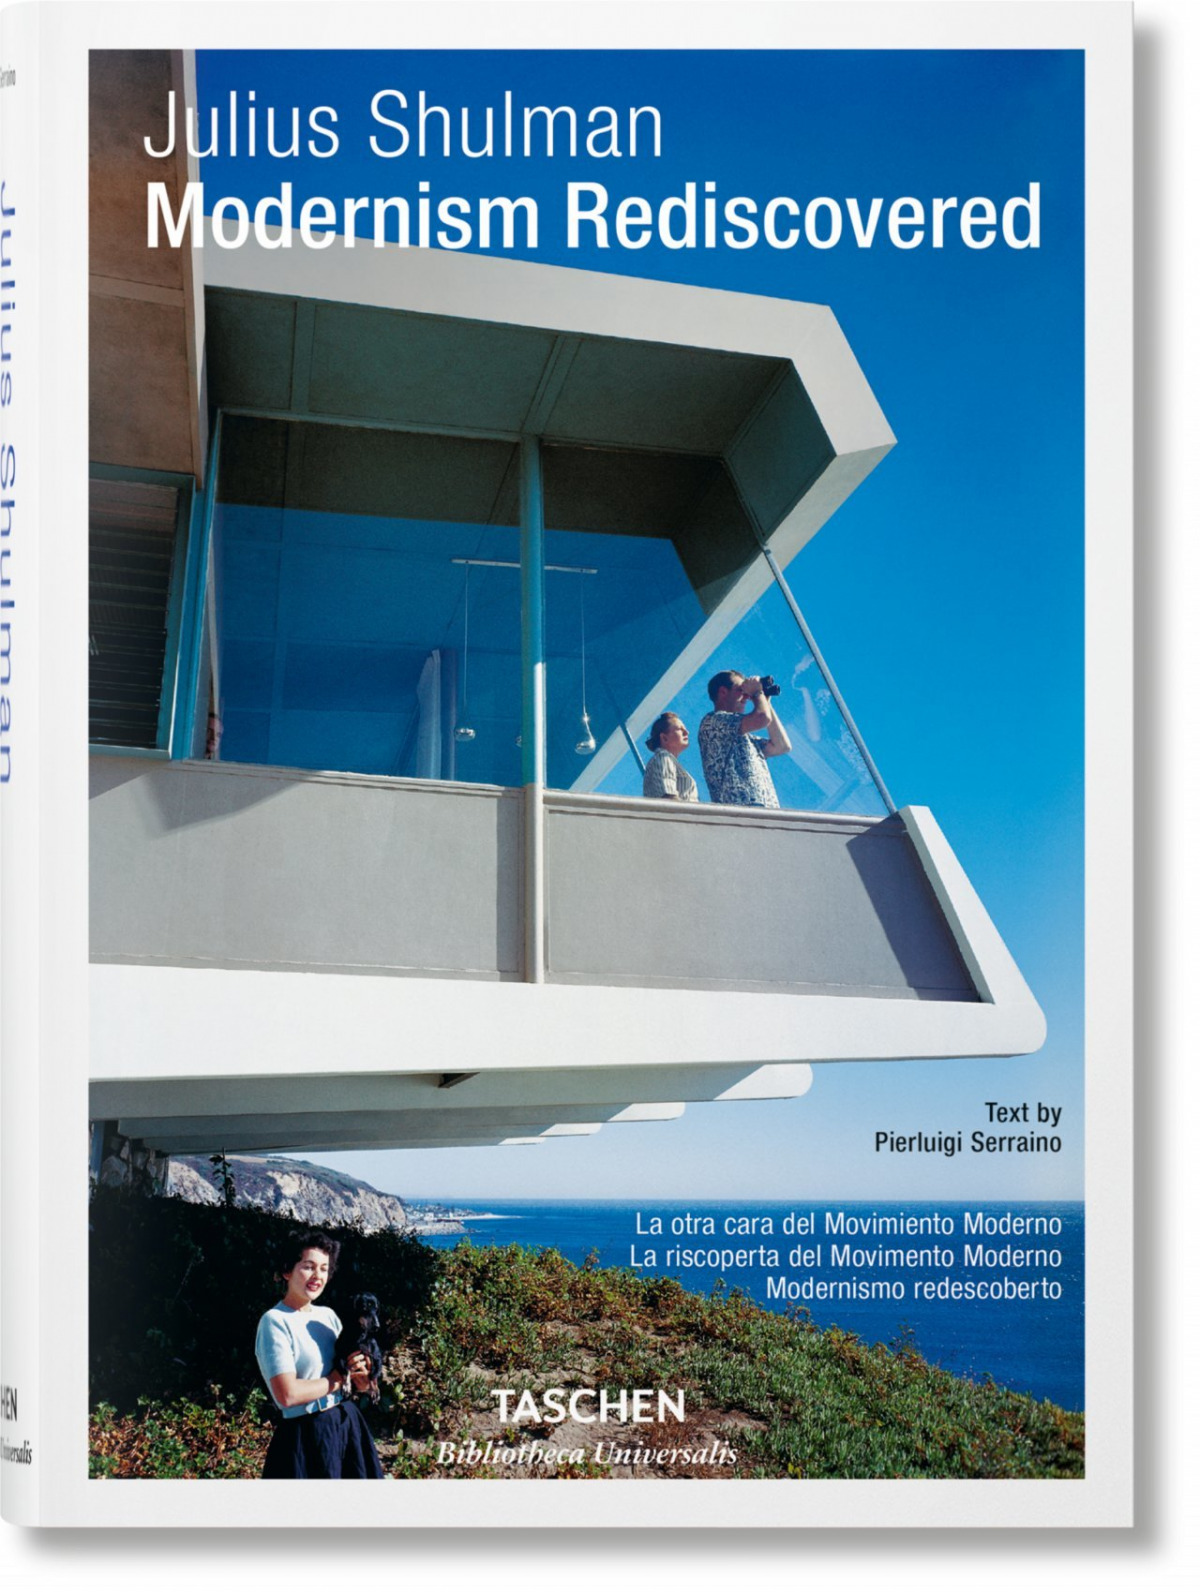 Modernism rediscovered - Shulman, Julius